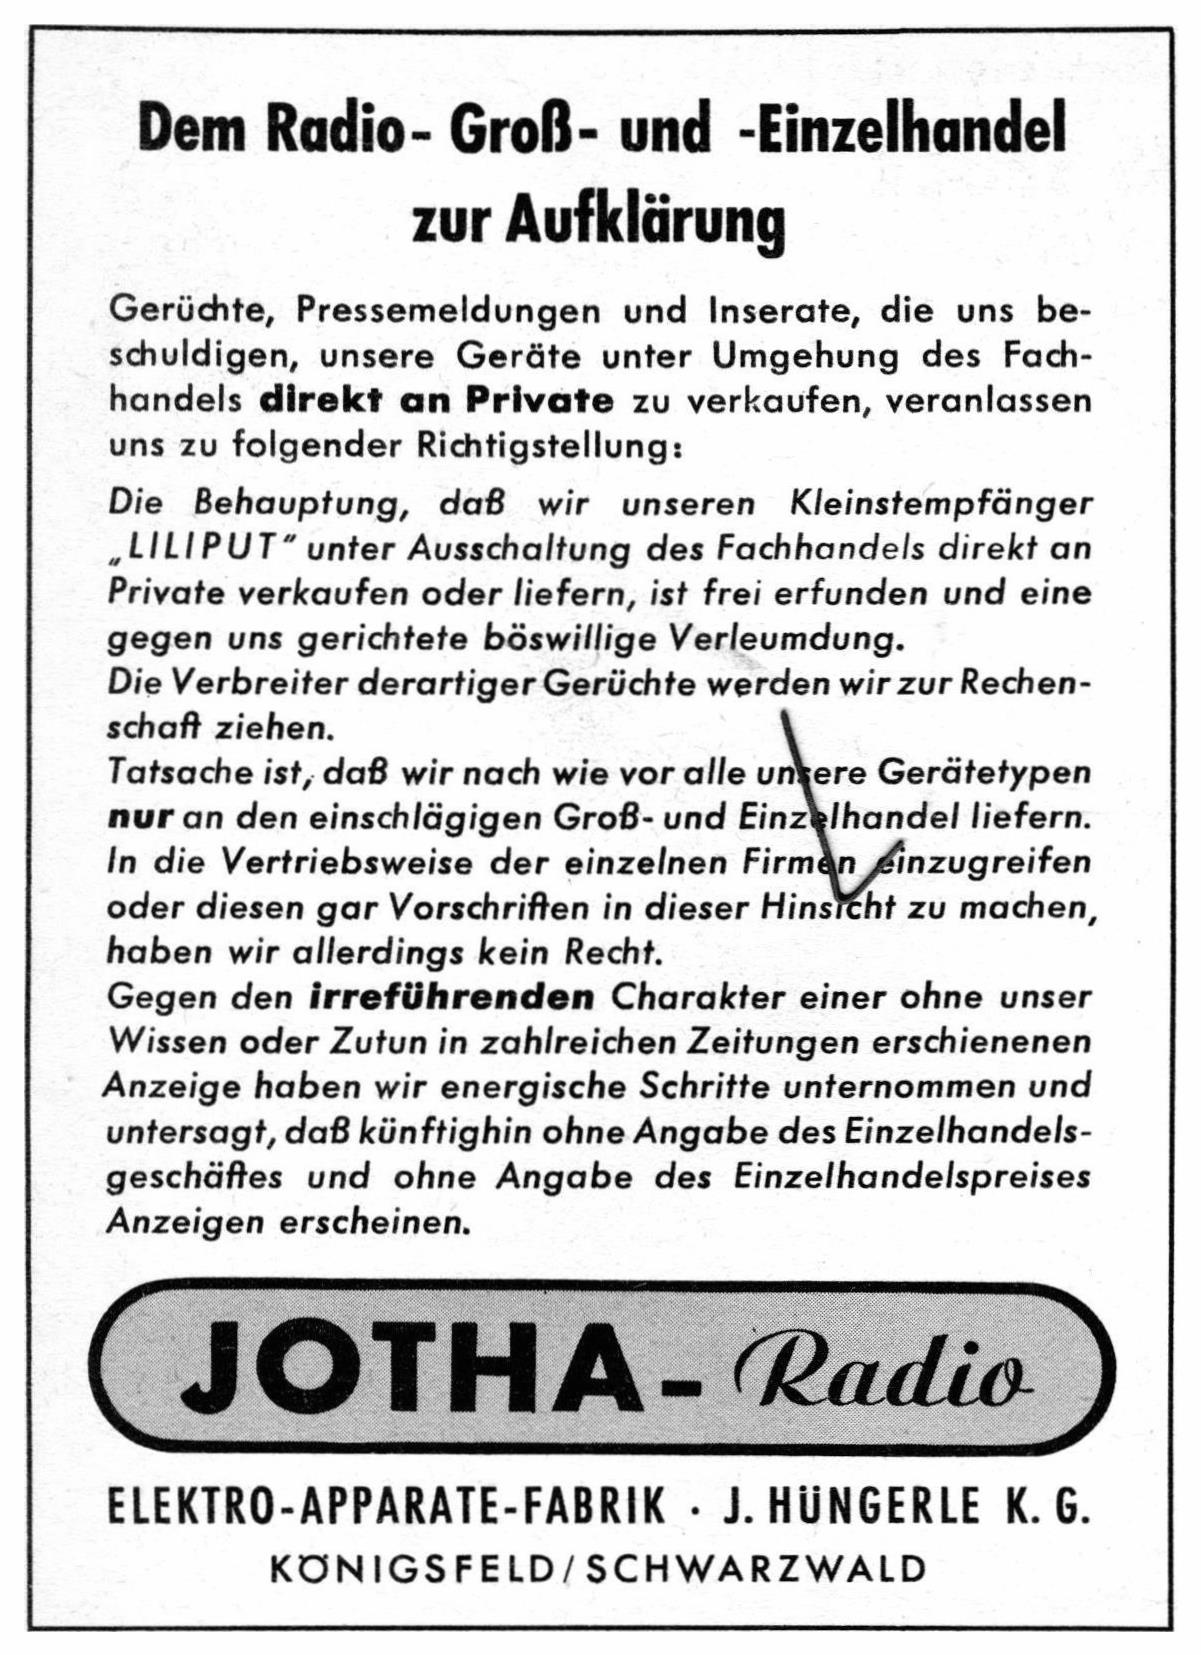 Jotha-Radio 1953 54.jpg